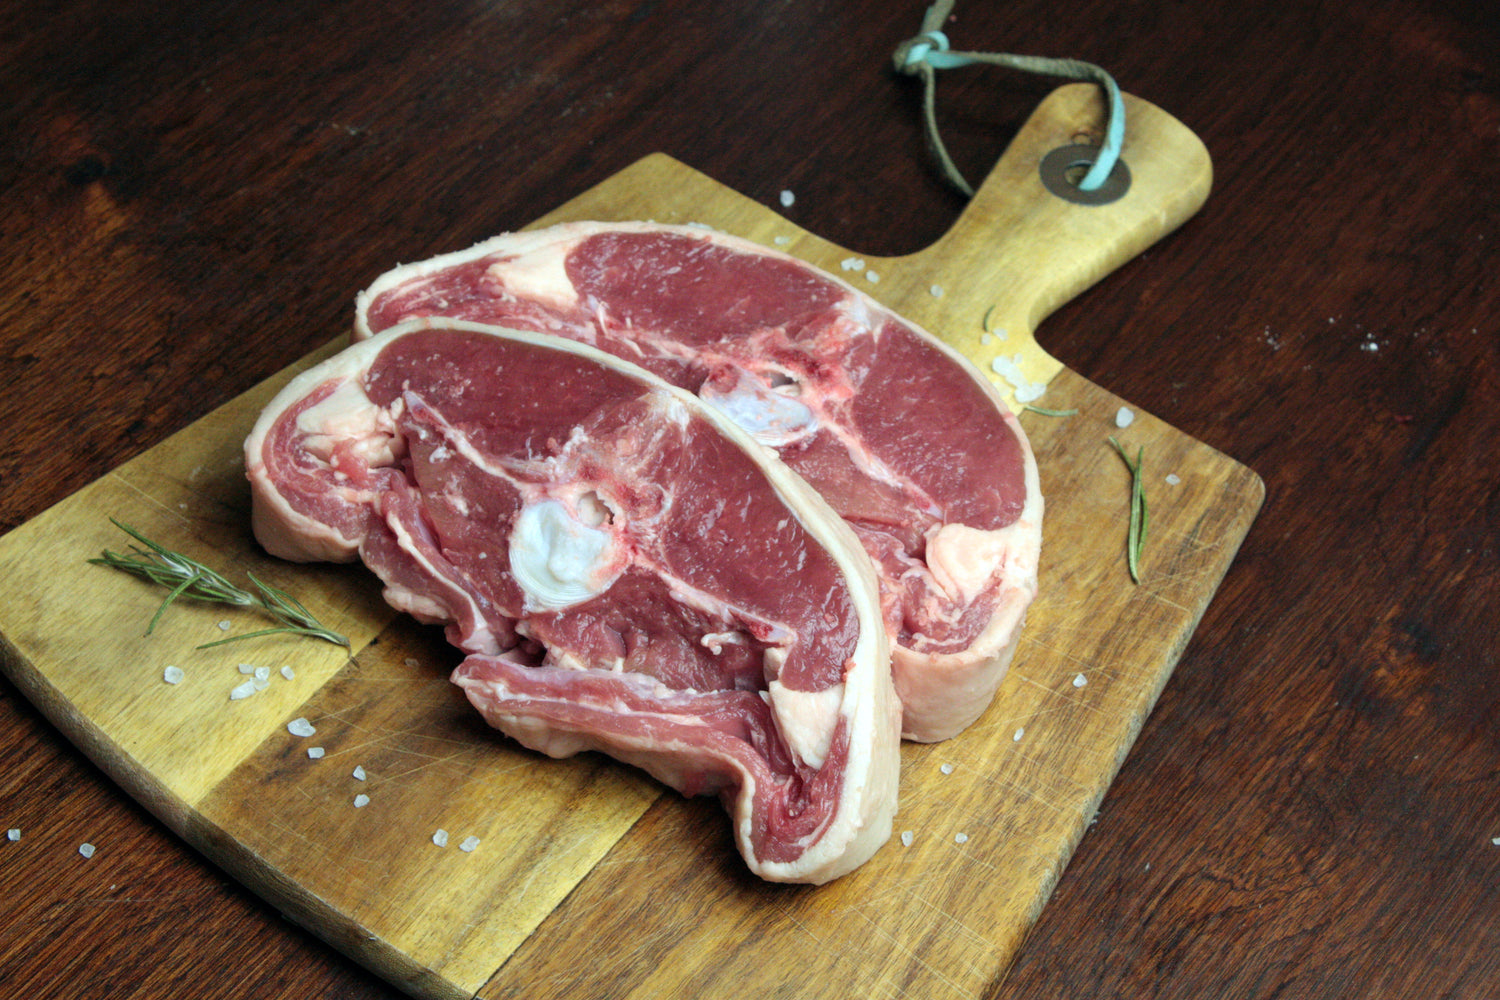 barnsley lamb chops on a cutting board